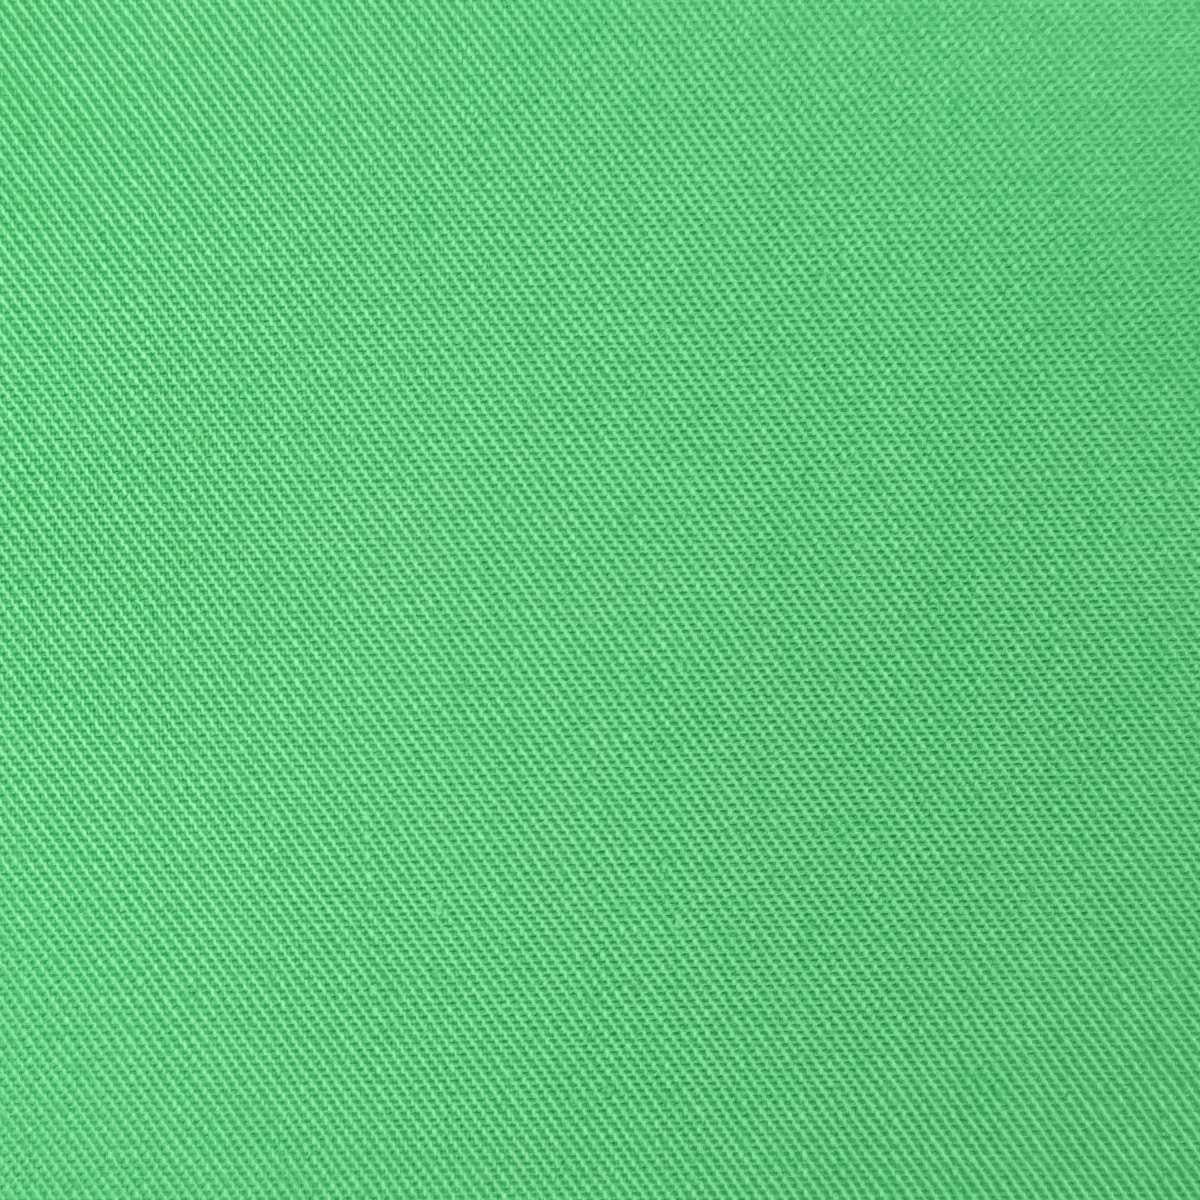 Cotton Woven Fabric-Emerald